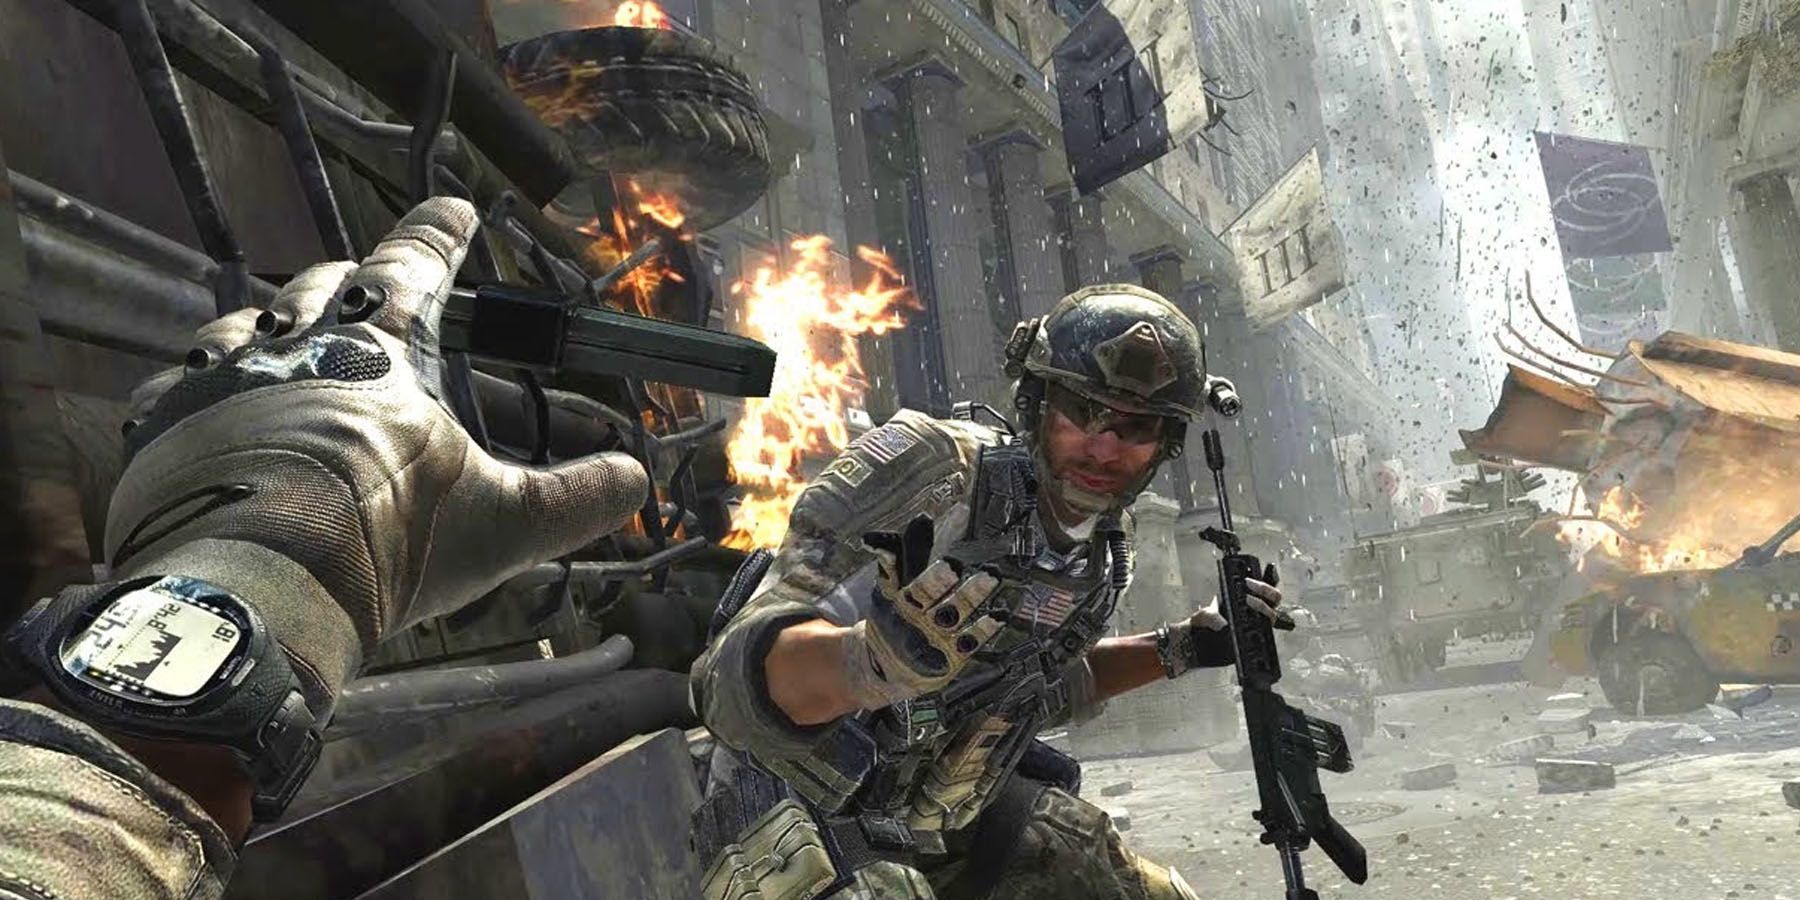 Black Tuesday from Modern Warfare 3